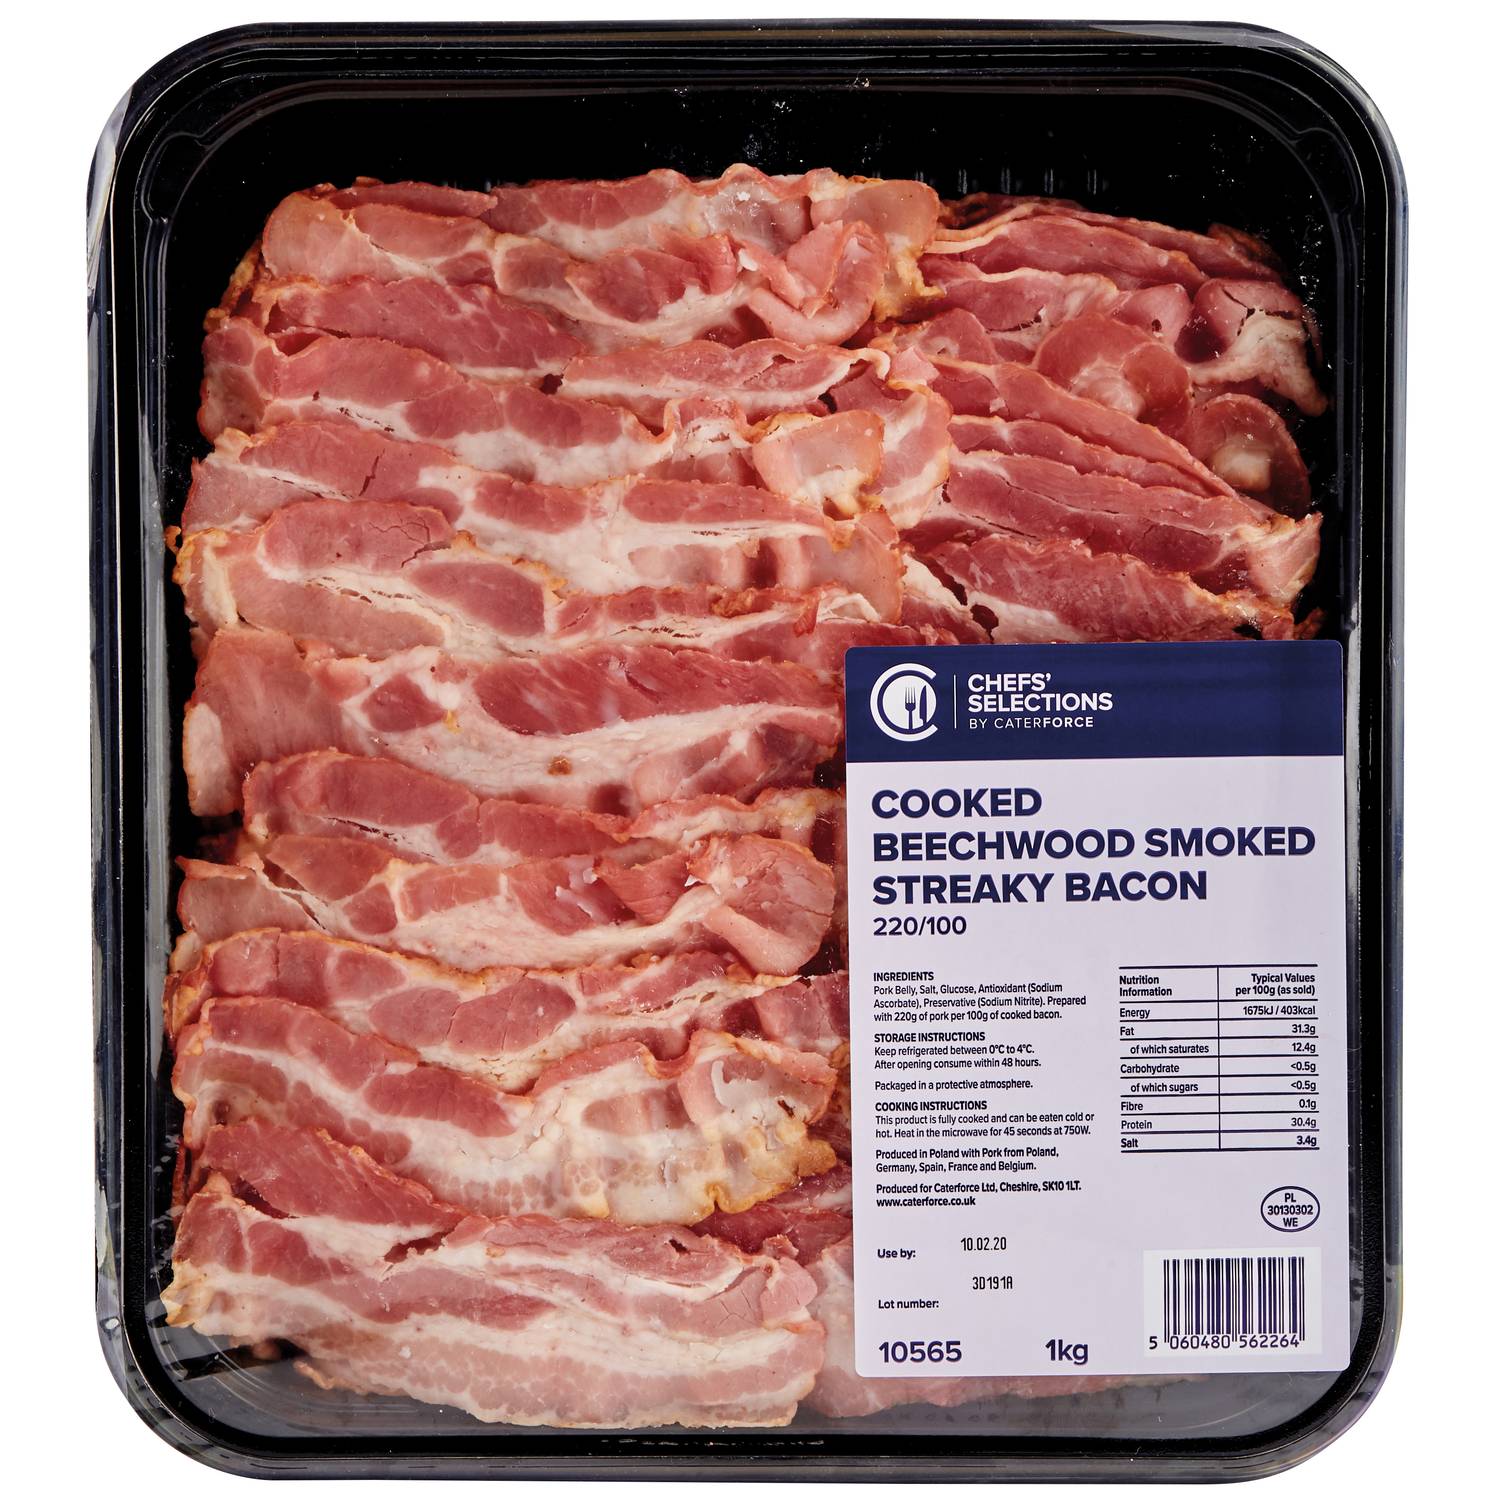 Chefs’ Selections Cooked Beechwood Smoked 220/100 Streaky Bacon (8 x 1kg)